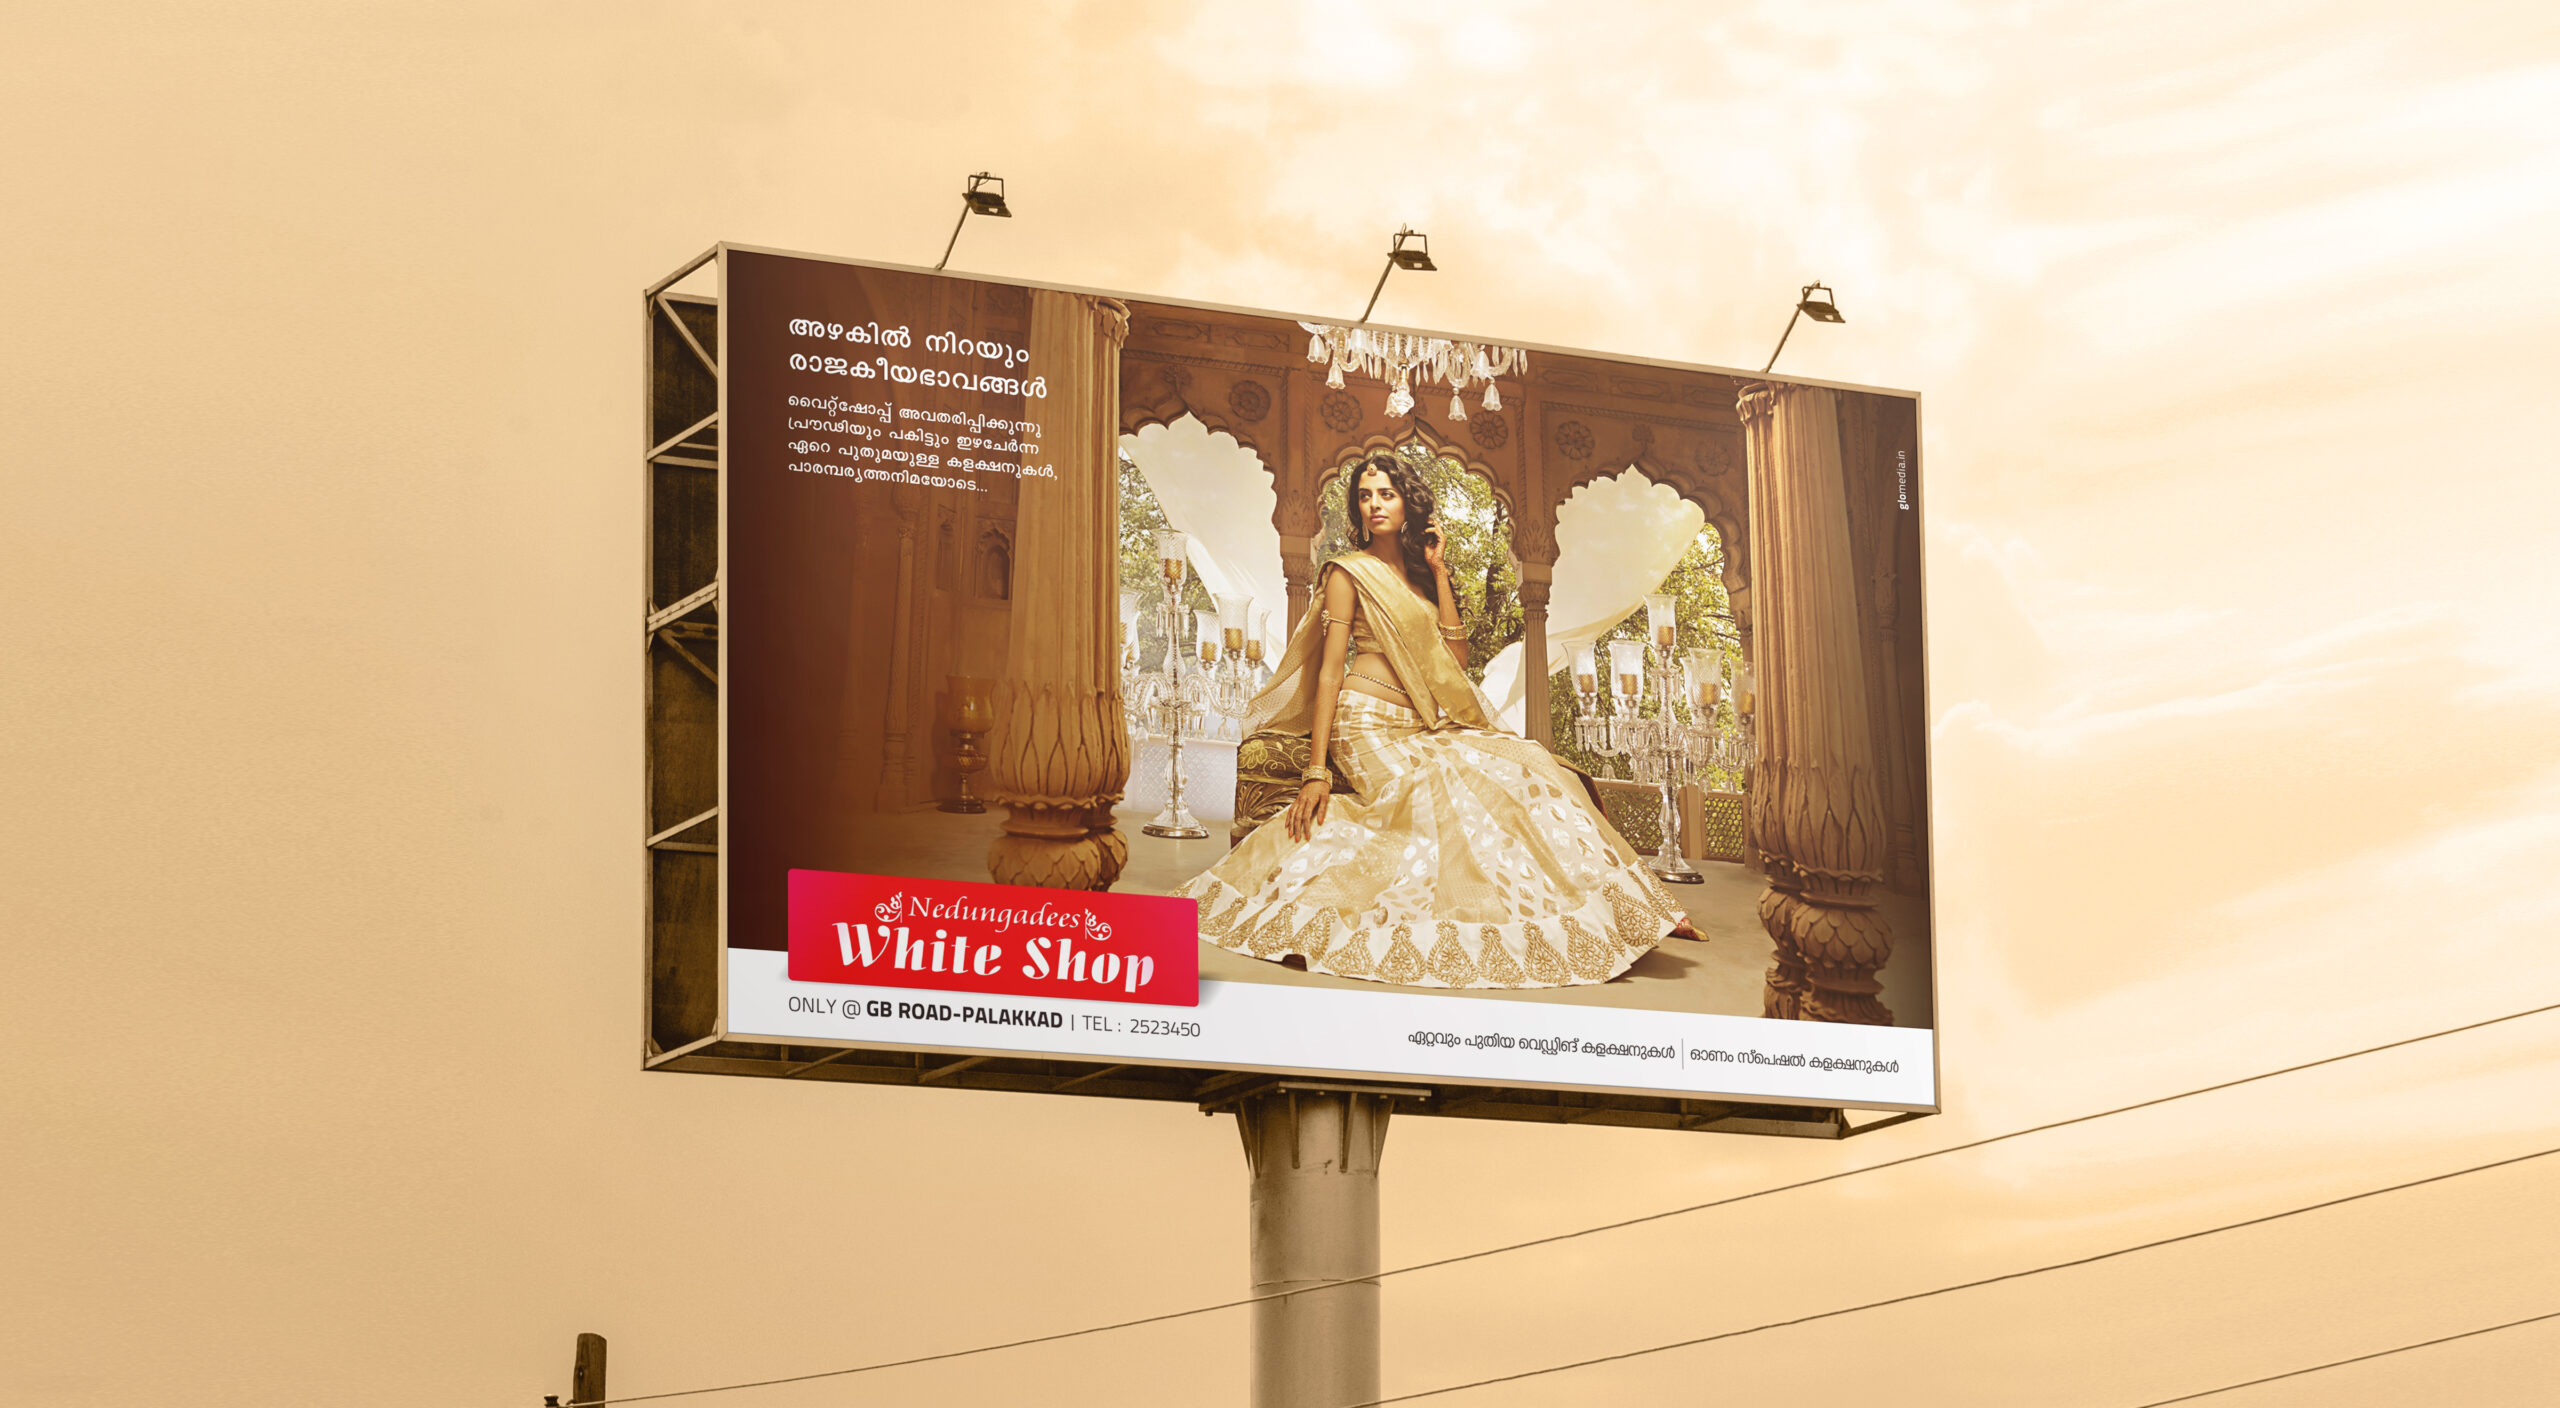 Nedungadees White Shop Wedding Festival hoarding or billboard design